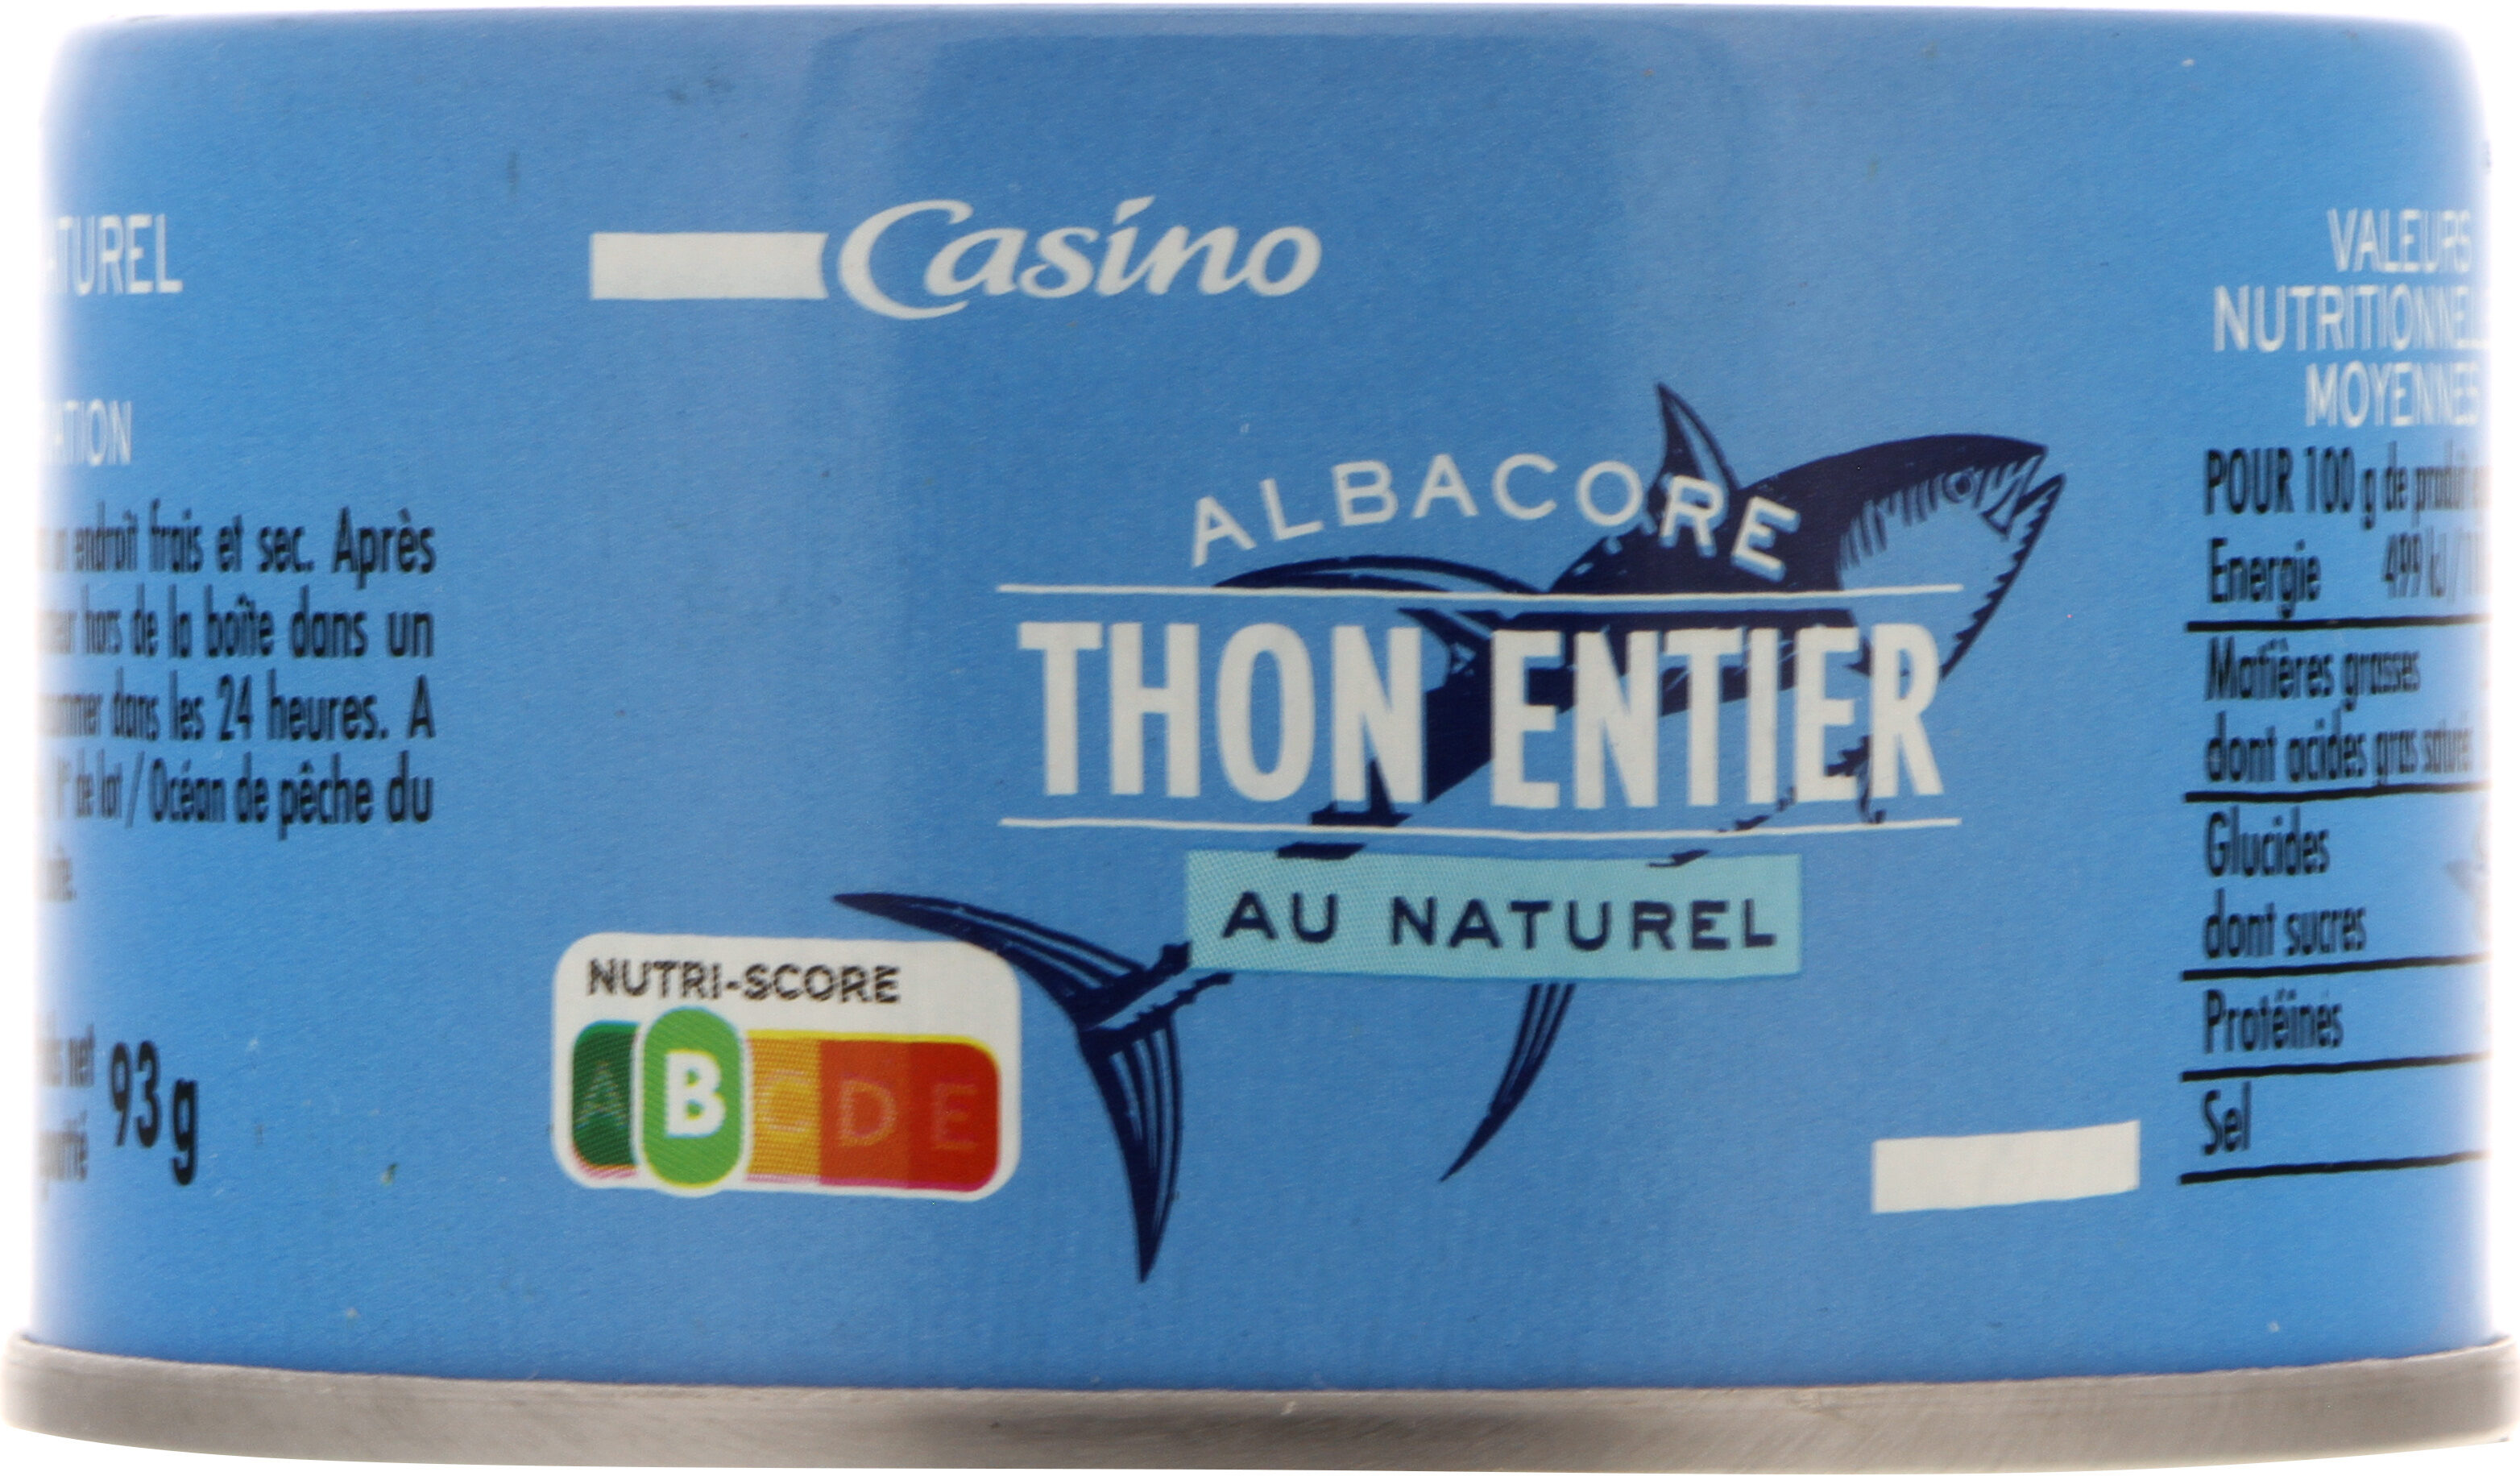 Thon Albacore au naturel - Product - fr